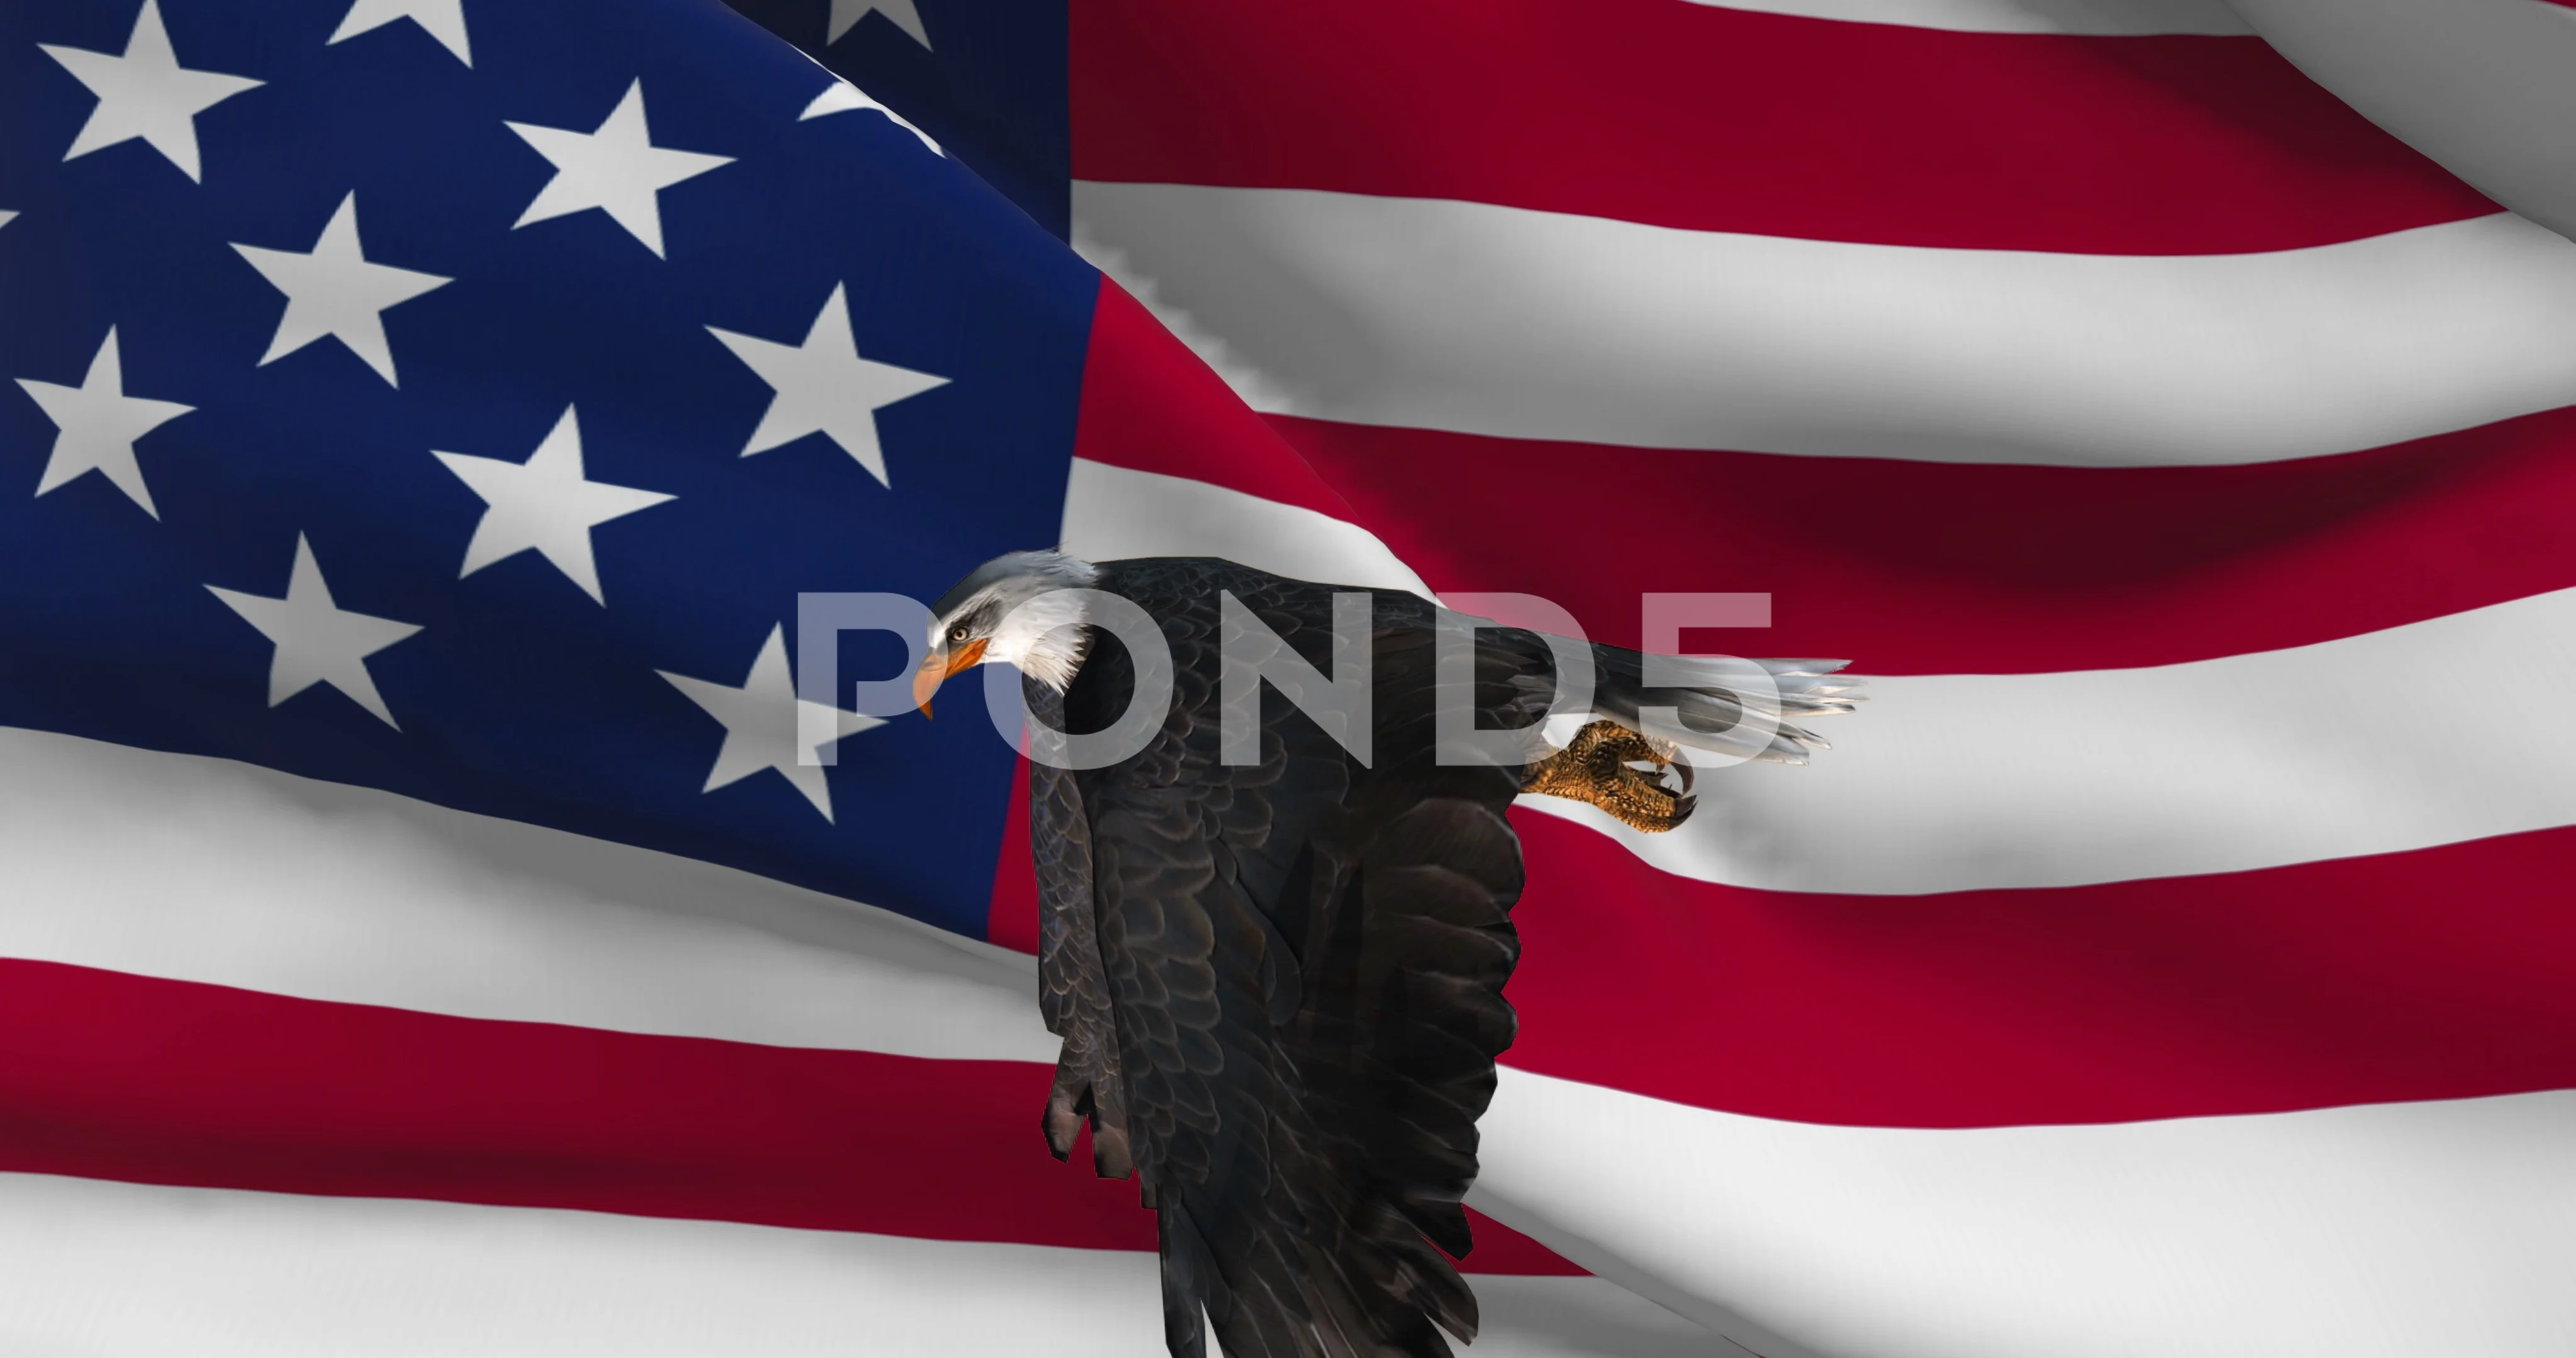 american eagle flying flag